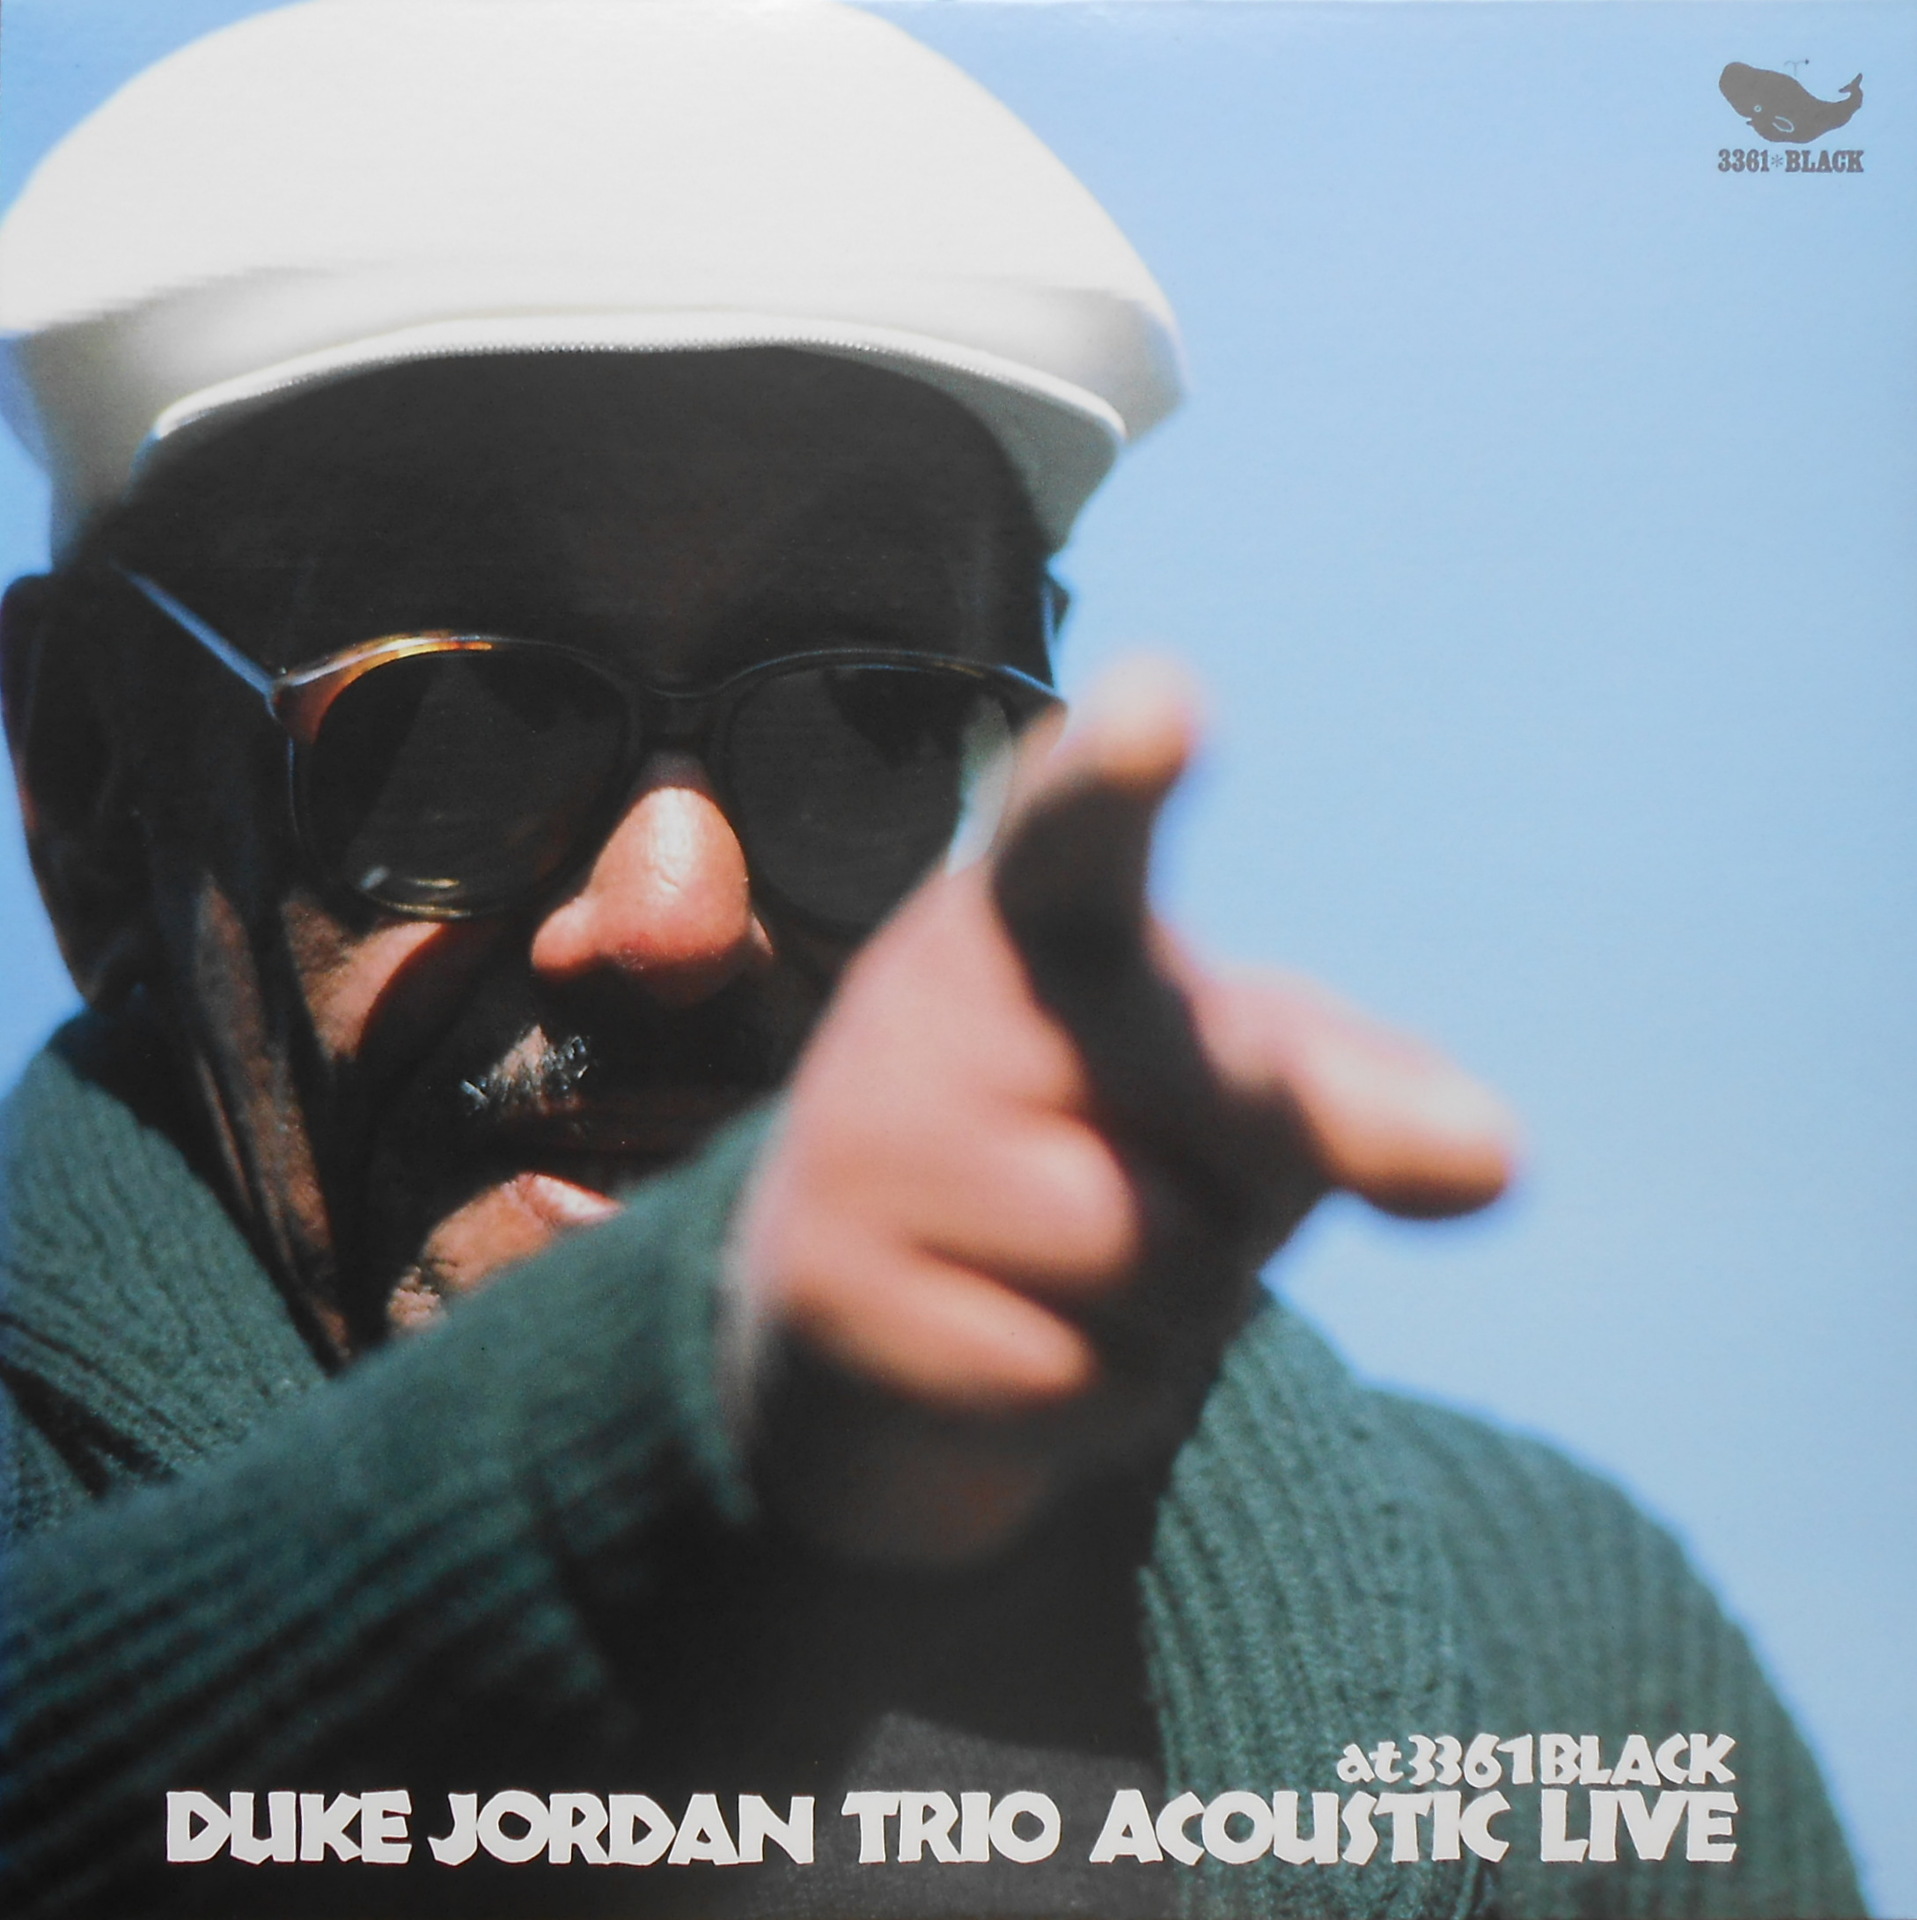 DUKE JORDAN - Duke Jordan Trio Acoustic Live cover 